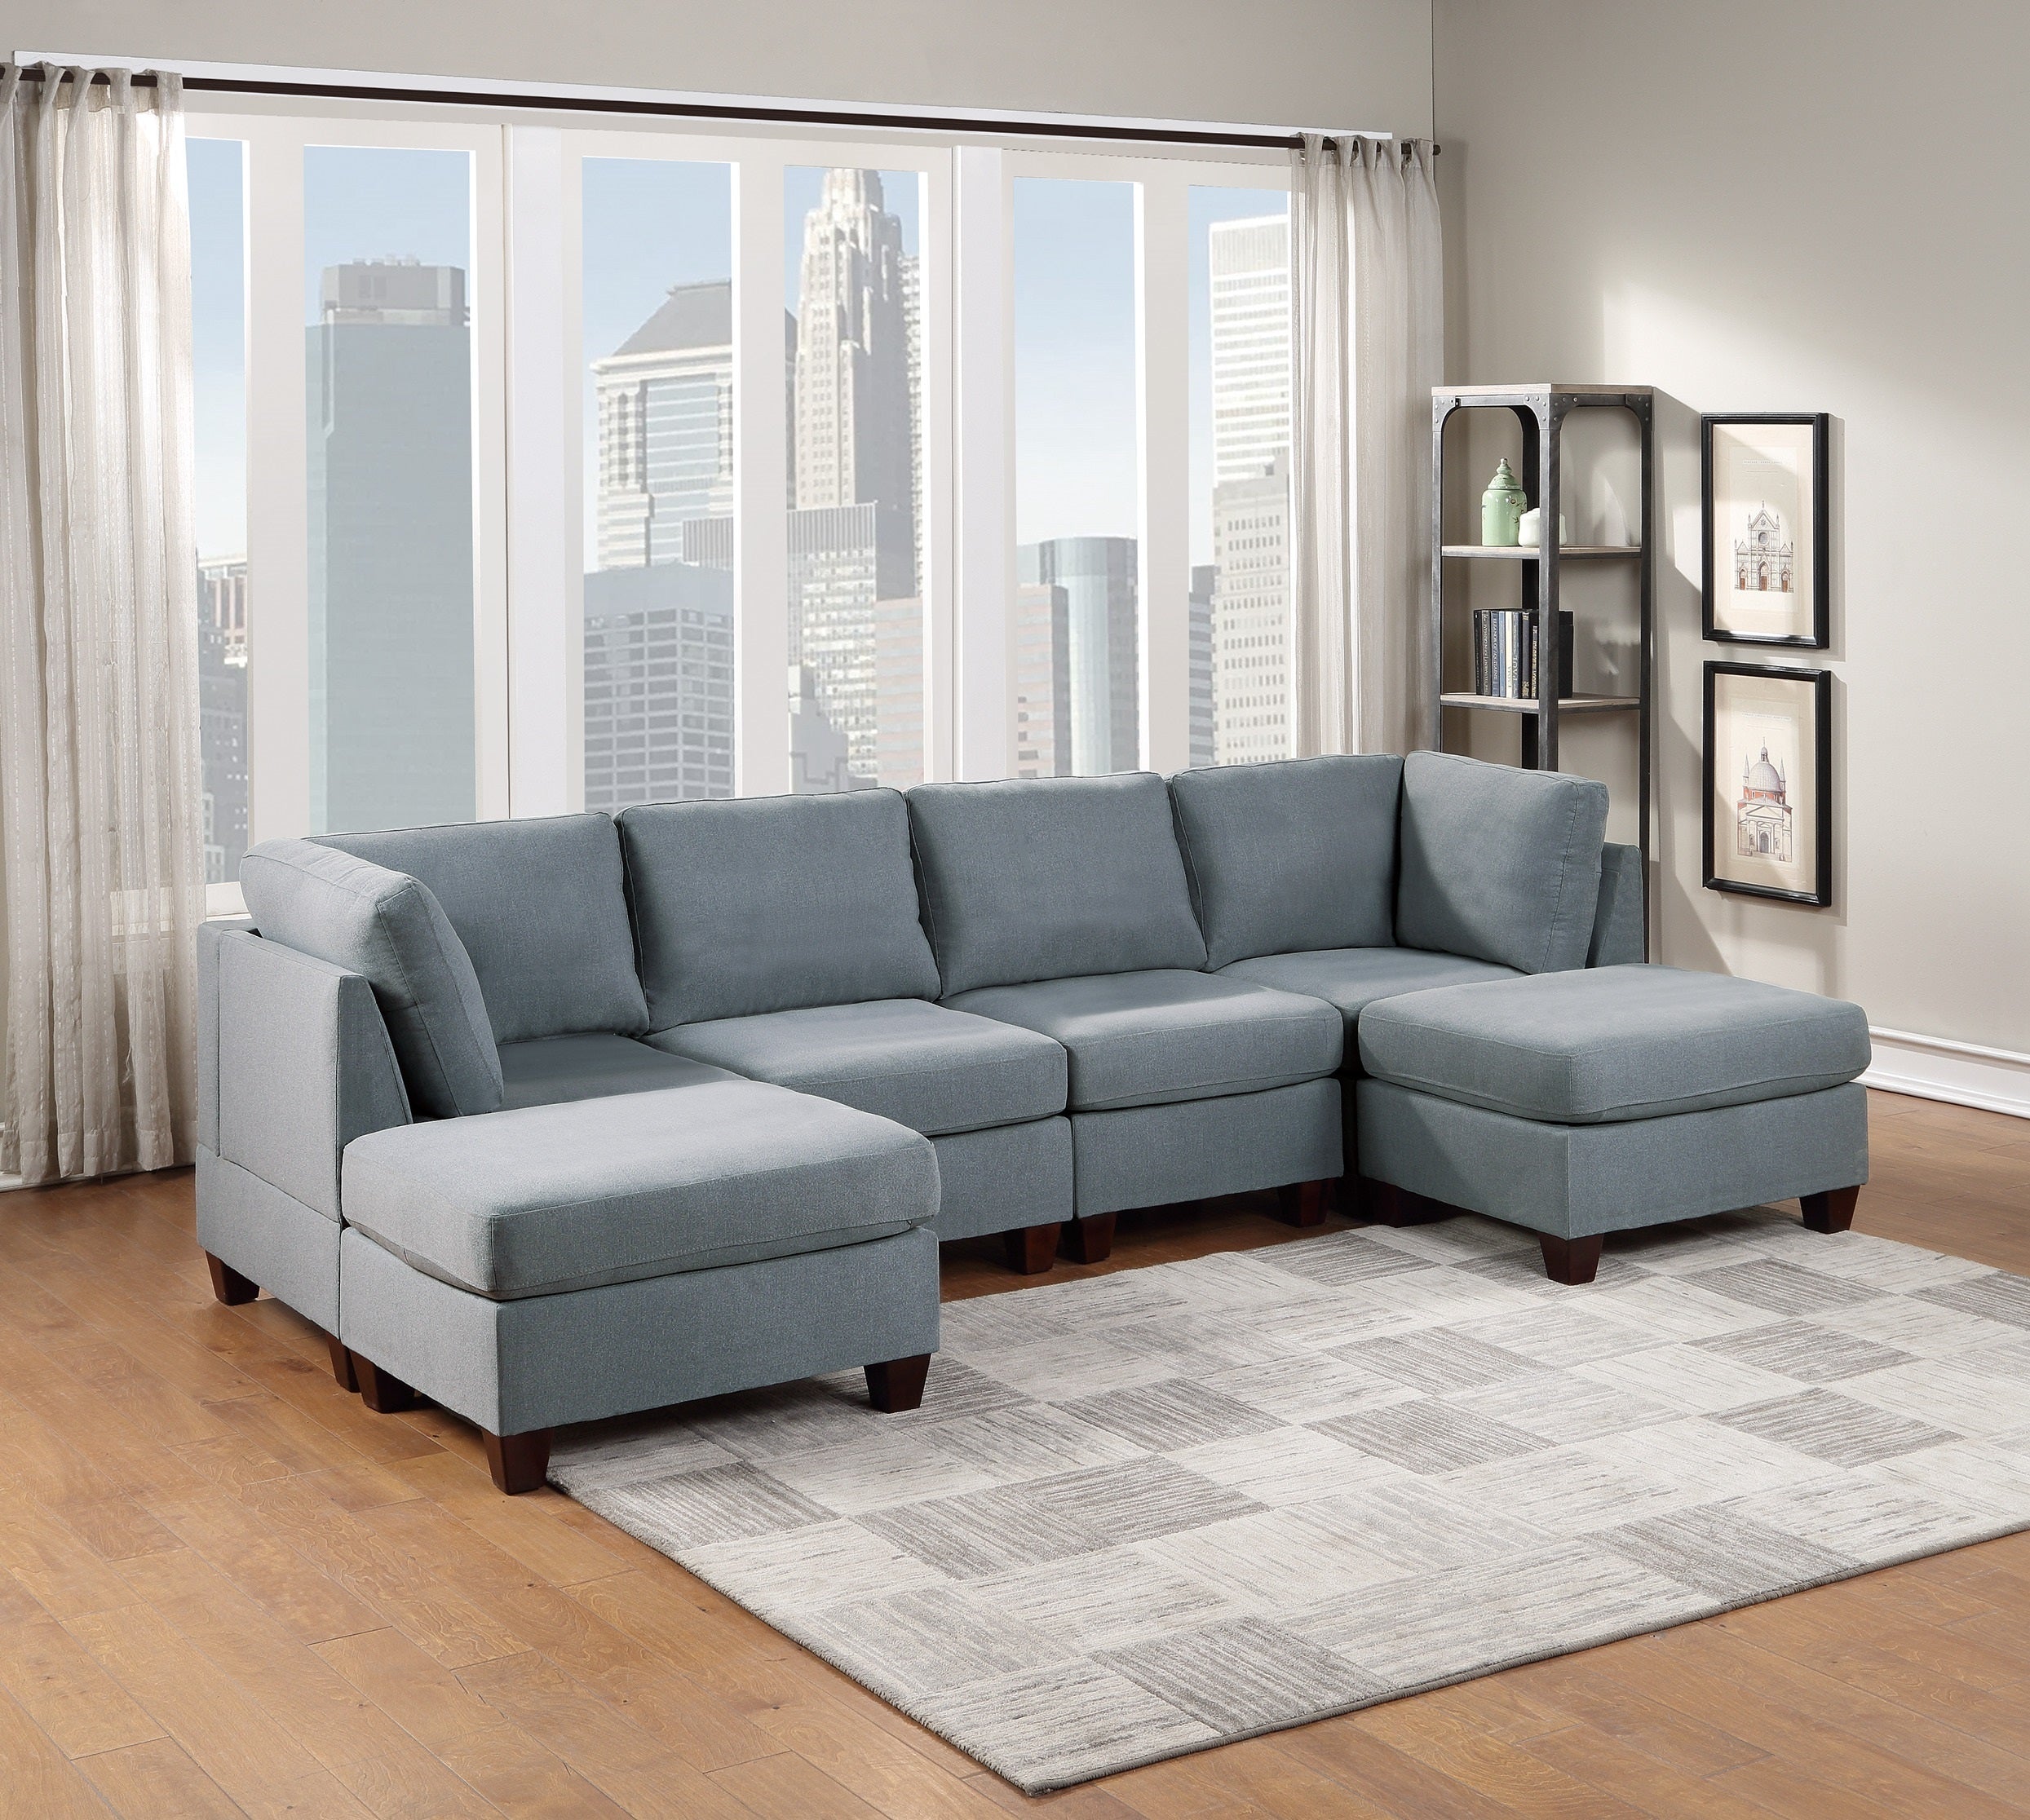 Modular Sectional 6pc Set Living Room Furniture